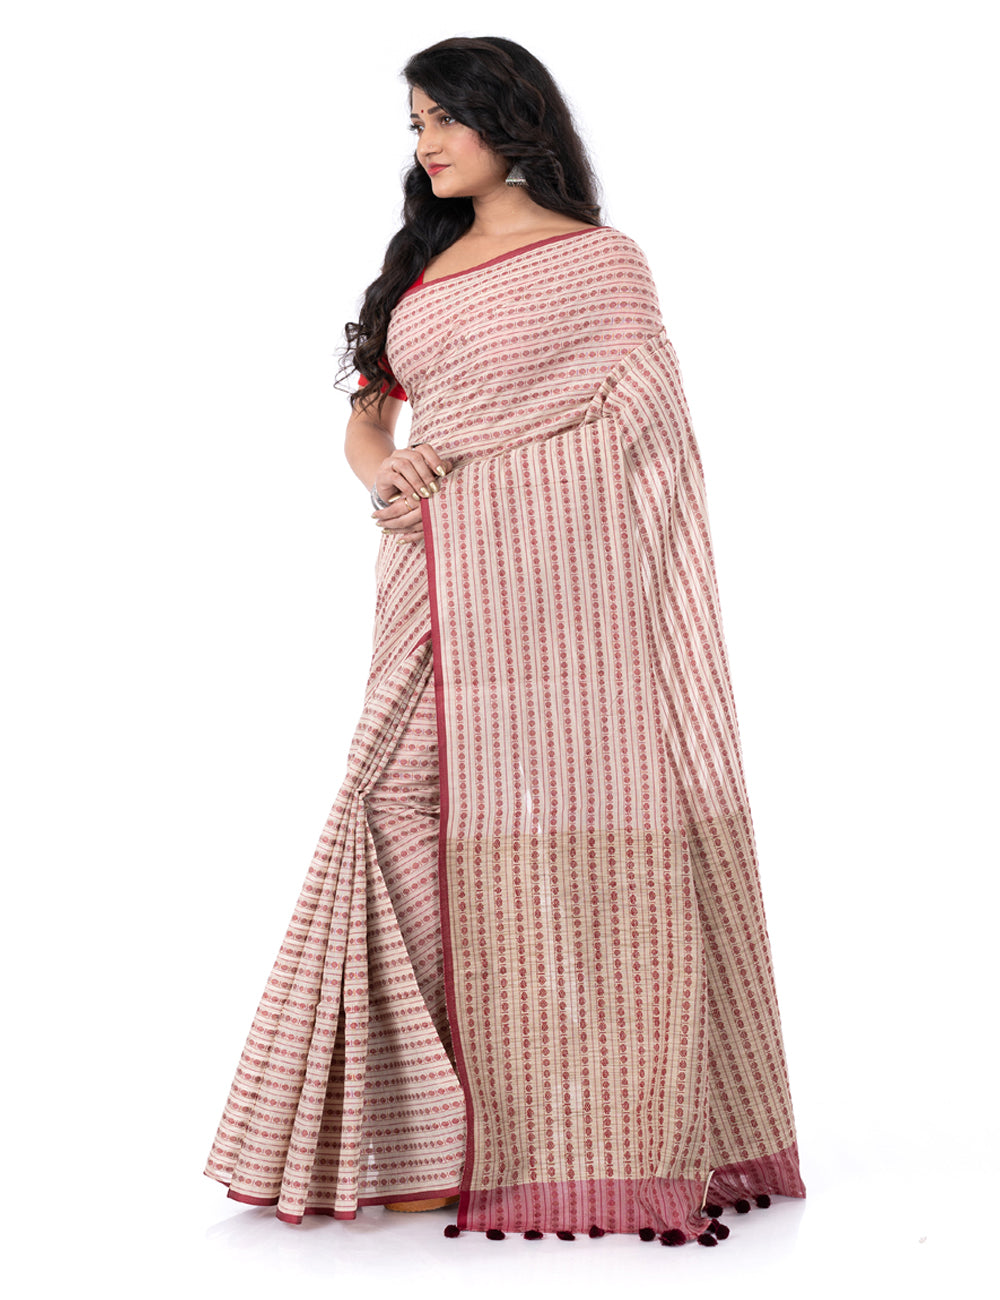 Brown offwhite handloom bengal cotton tangail saree